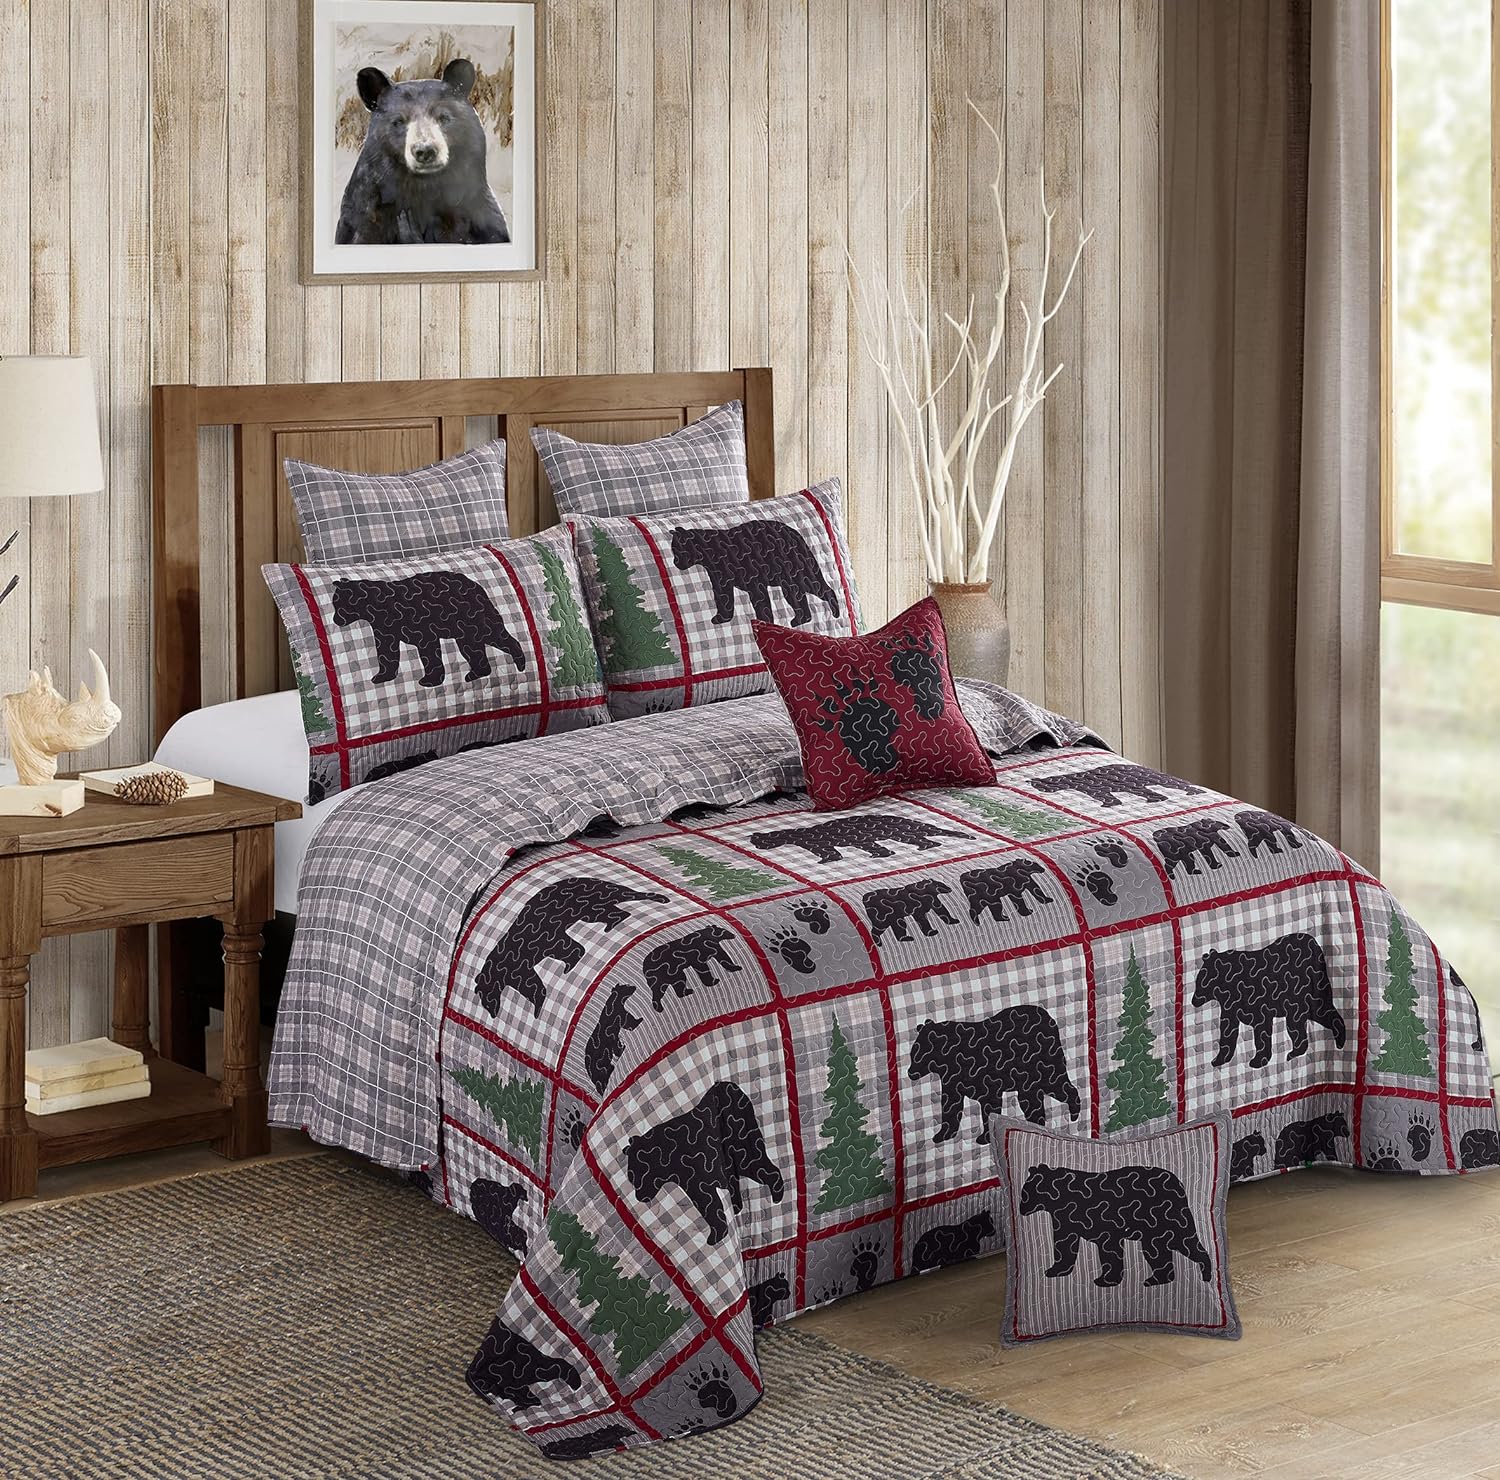 Virah Bella 3 Piece King Cabin Quilt Bedding Set - Ashville - Rustic Country Reversible Patchwork Comforter Set with Decorative Pillow Shams, Gray/Silver